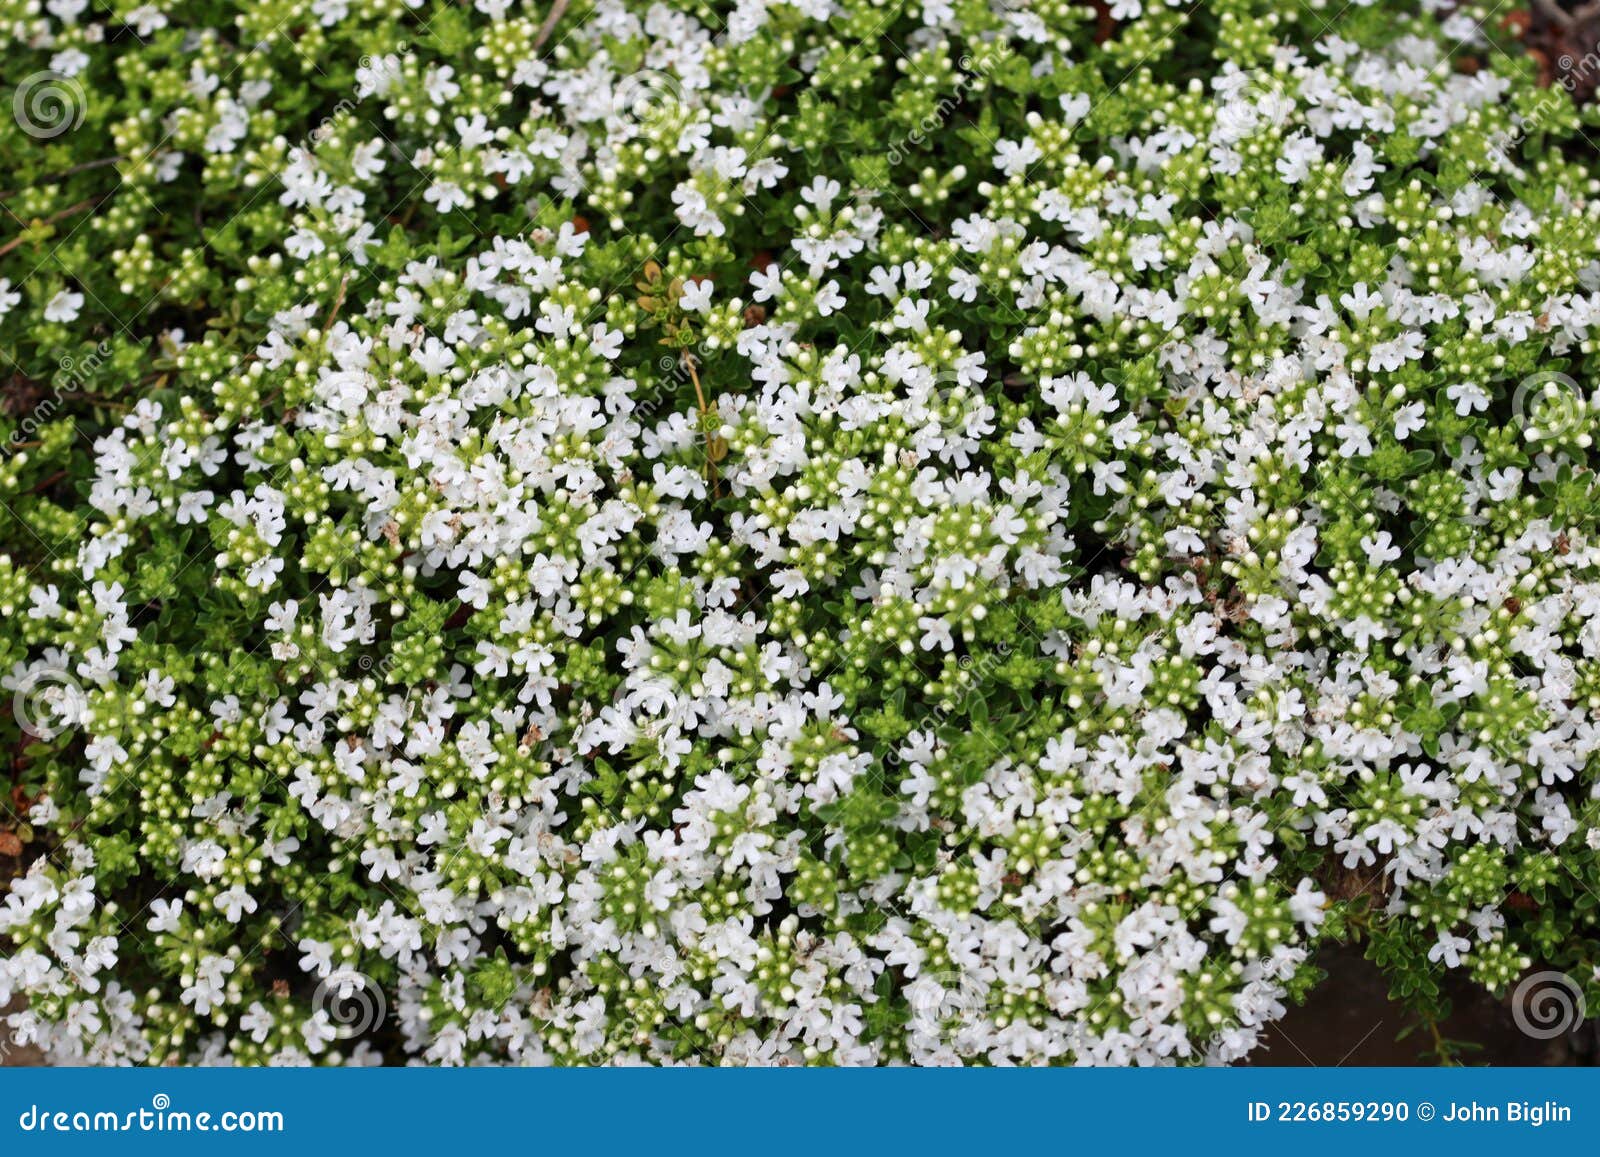 Fleurs Blanches De Thym Rampantes En Gros Plan Photo stock - Image du  thymus, brouillé: 226859290